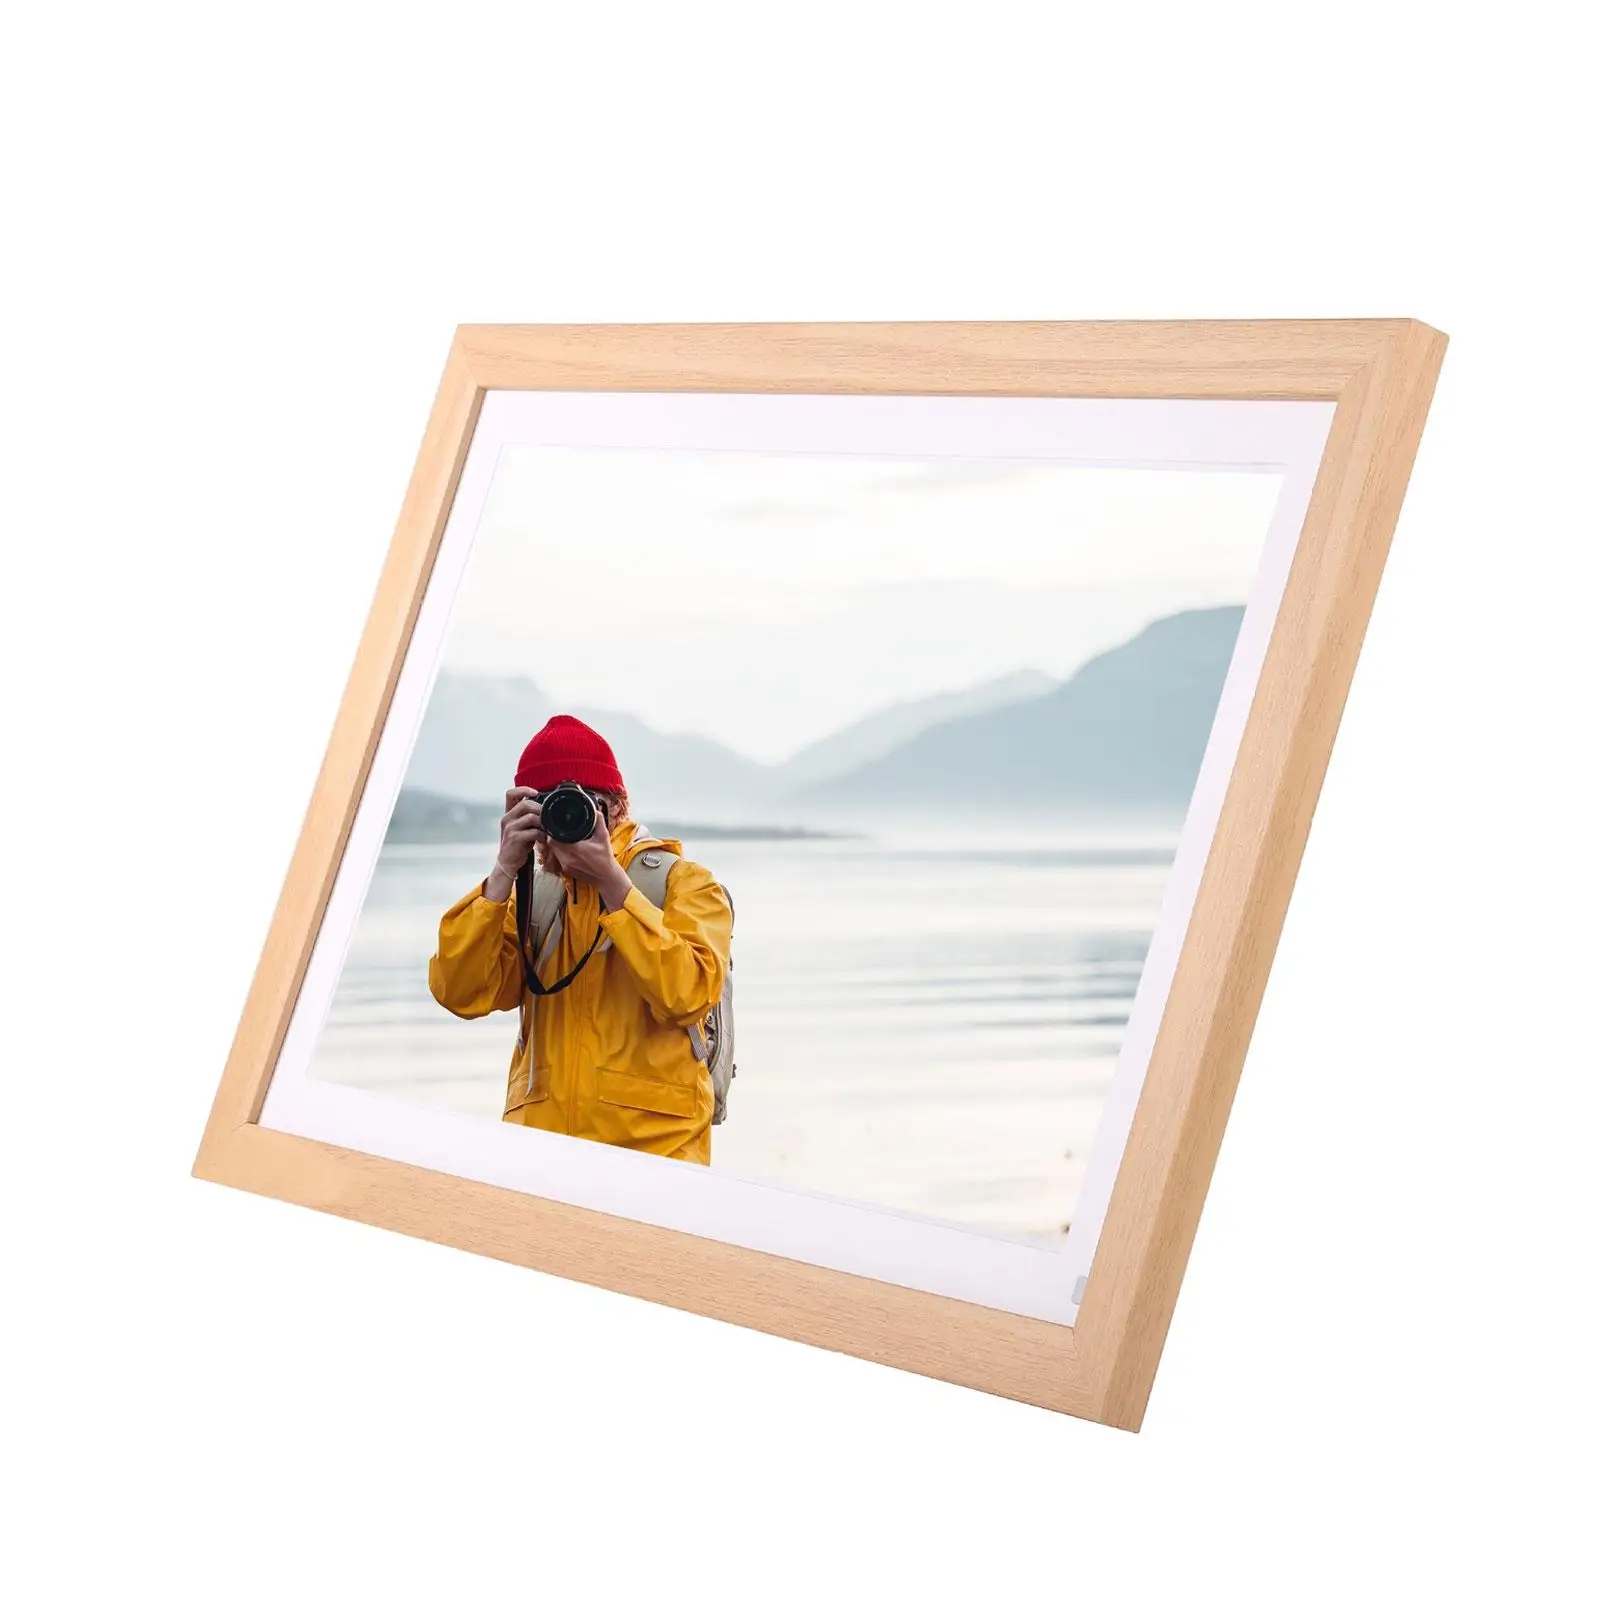 Digital Photo Frame Auto Rotating Portrait and Landscapes Easy Setup for Home Decor